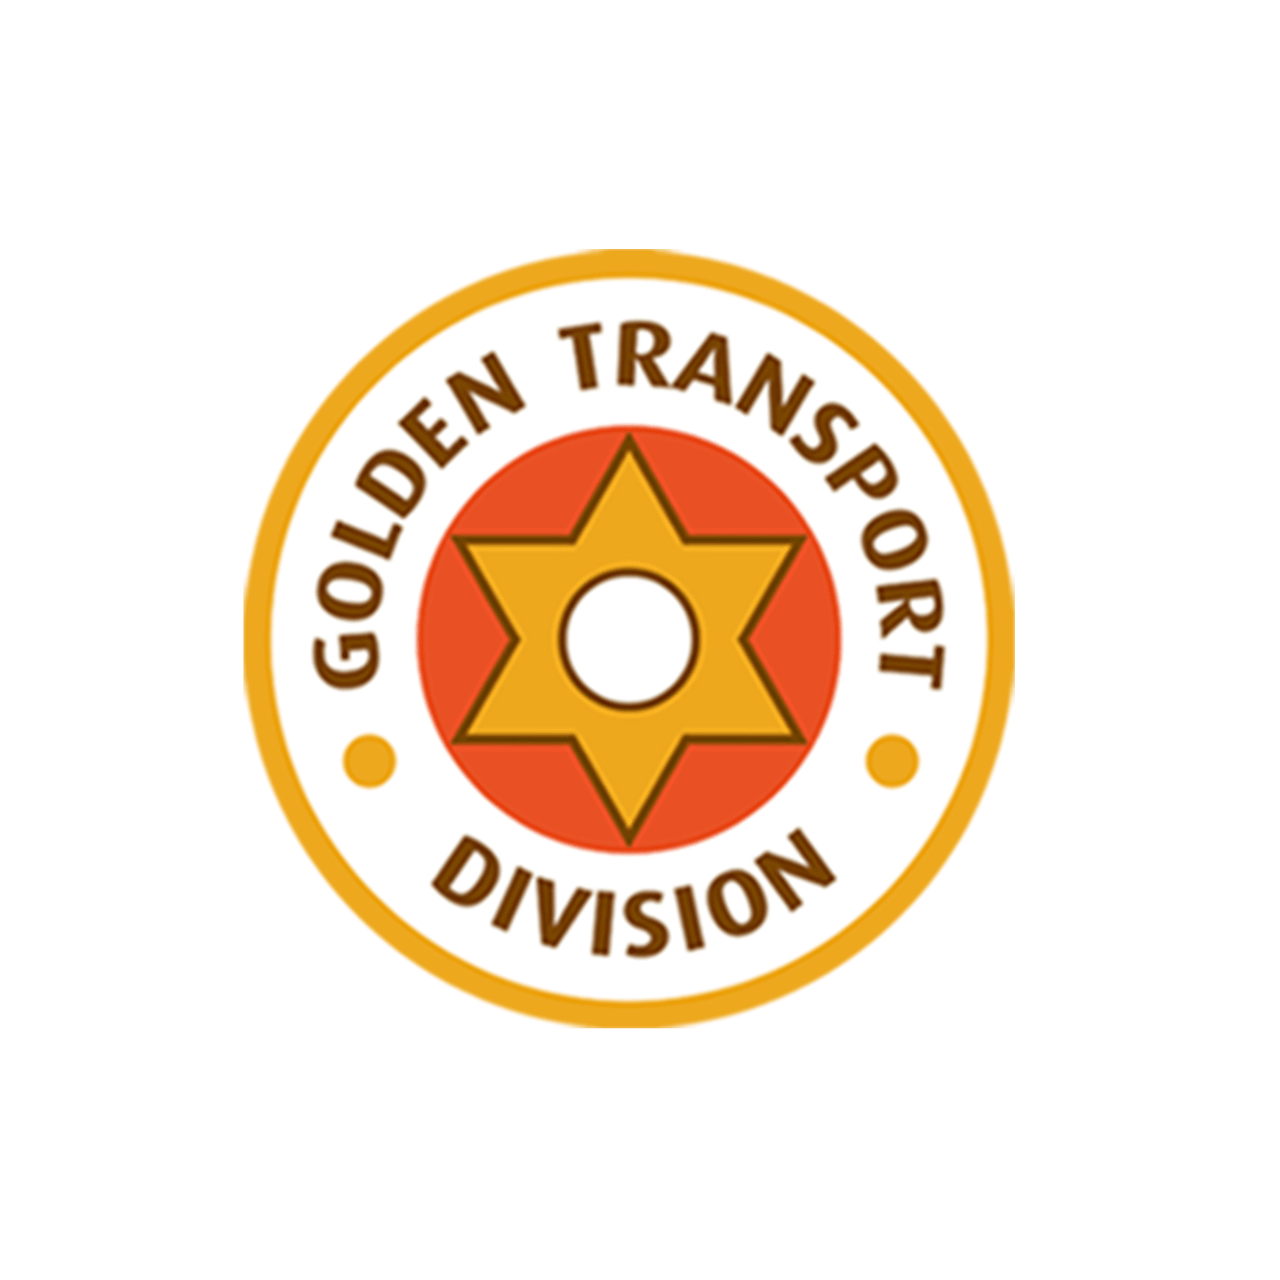 With Orange Circle Transportation Company Logo - Golden Transport Company | FMN